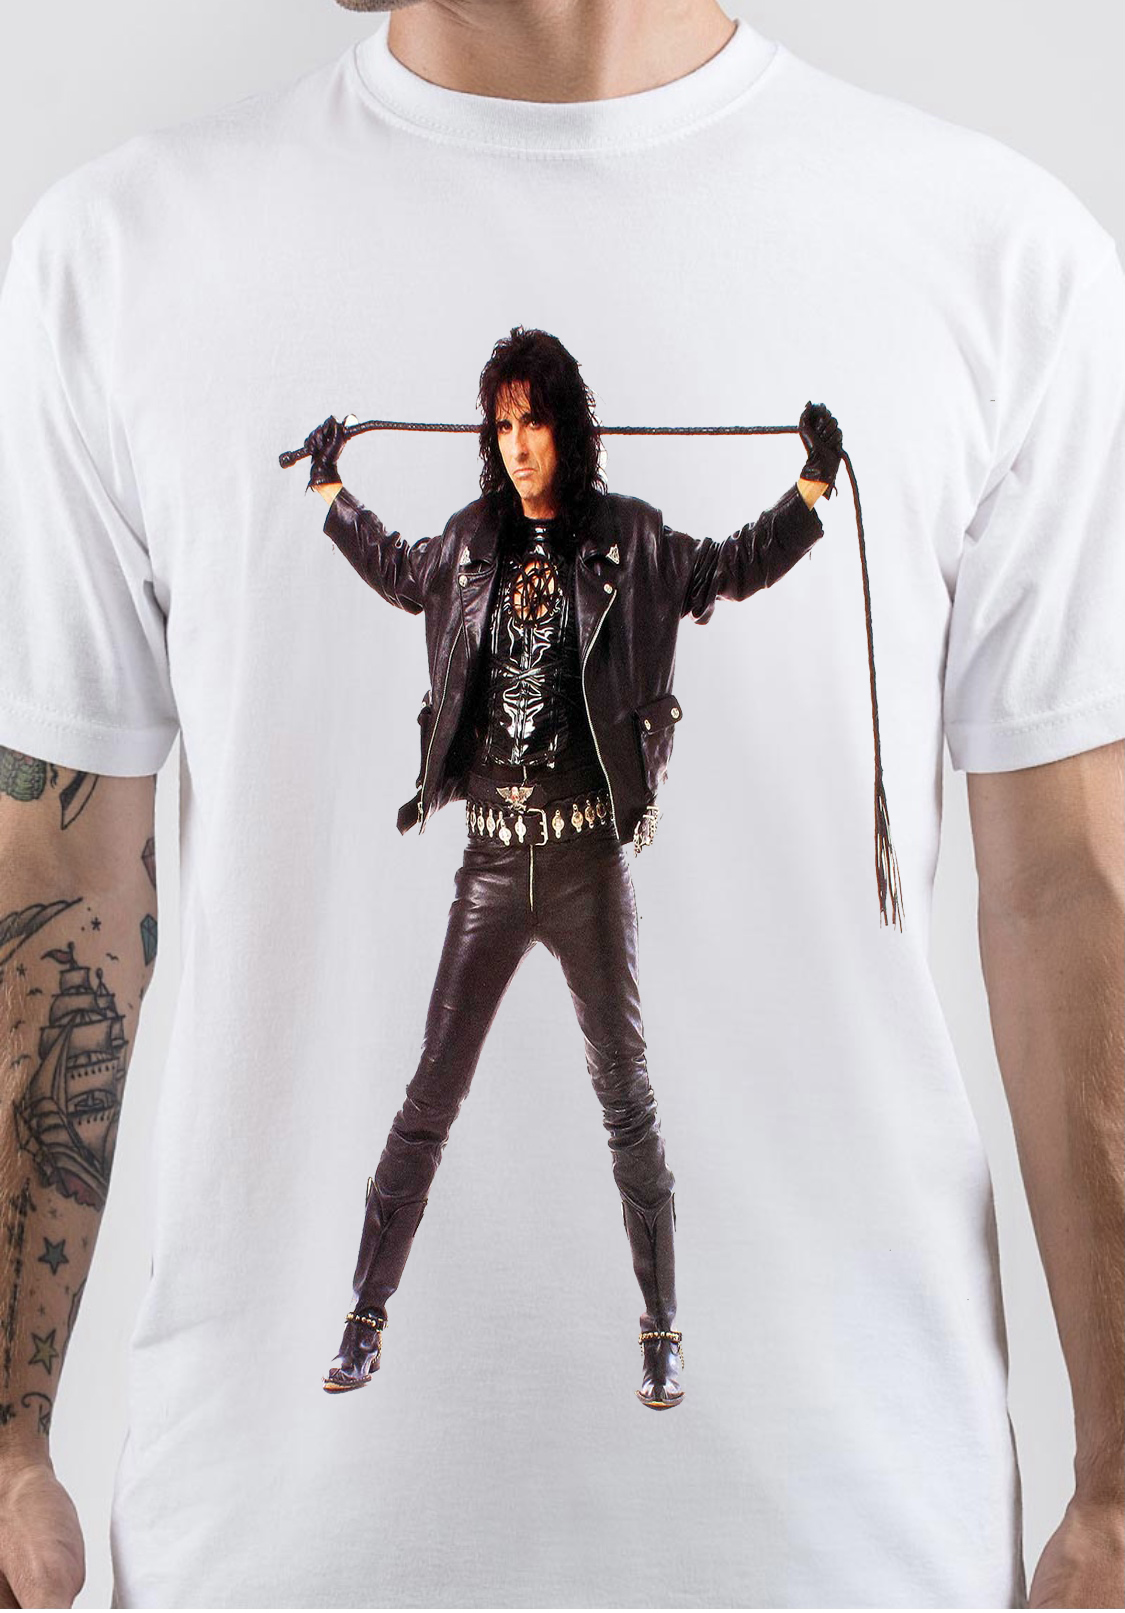 Alice Cooper T-Shirt And Merchandise